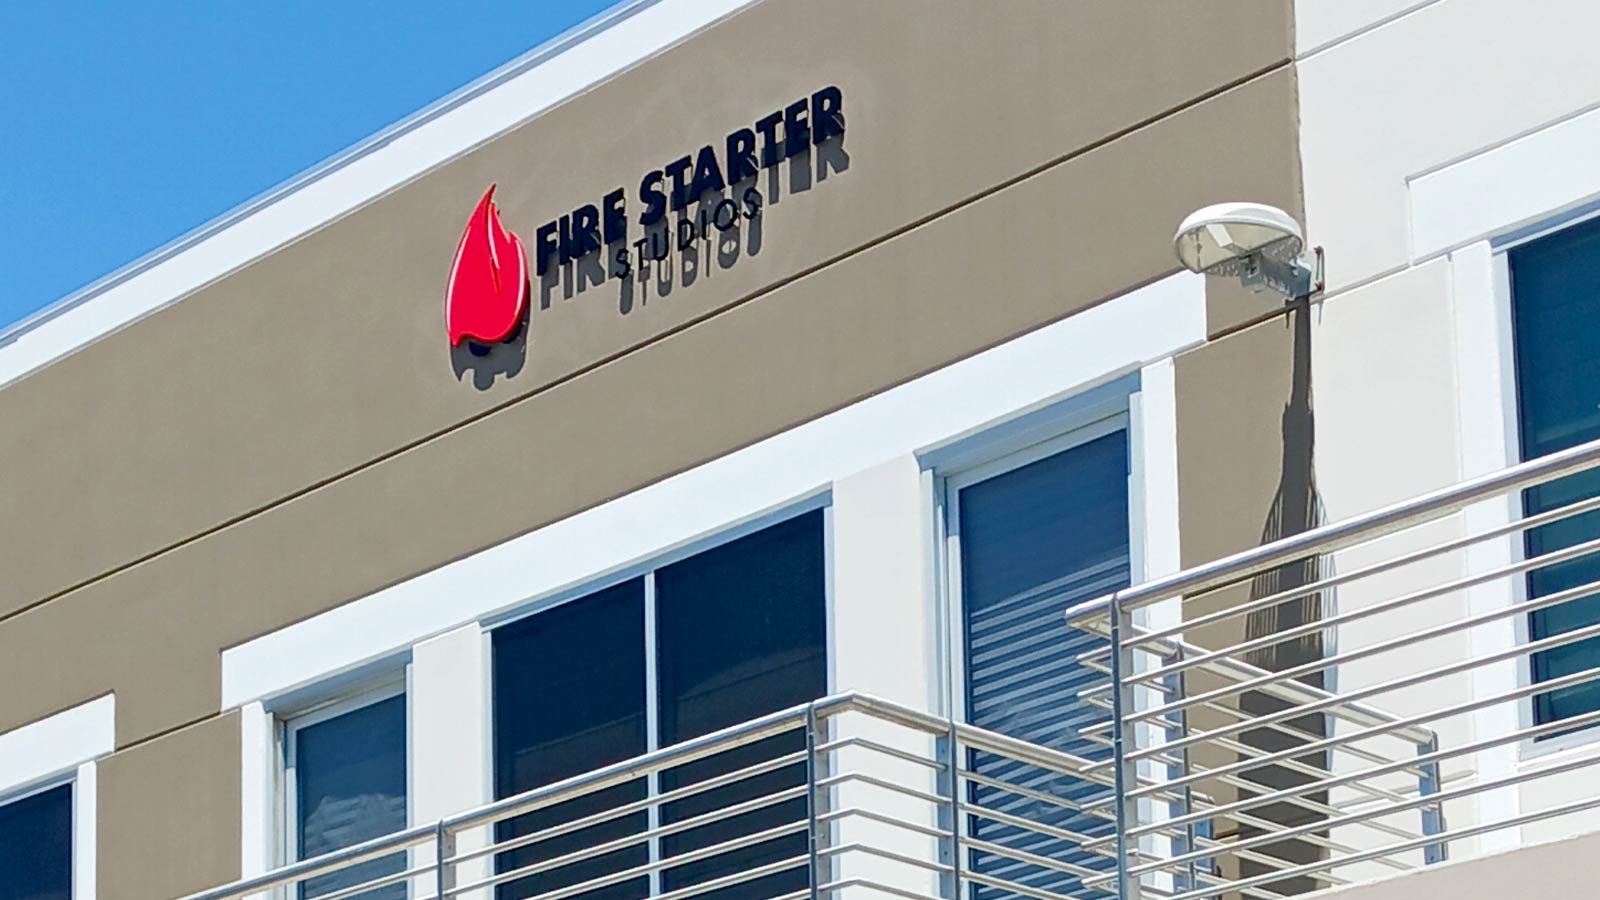 Fire Starter Studios building top sign